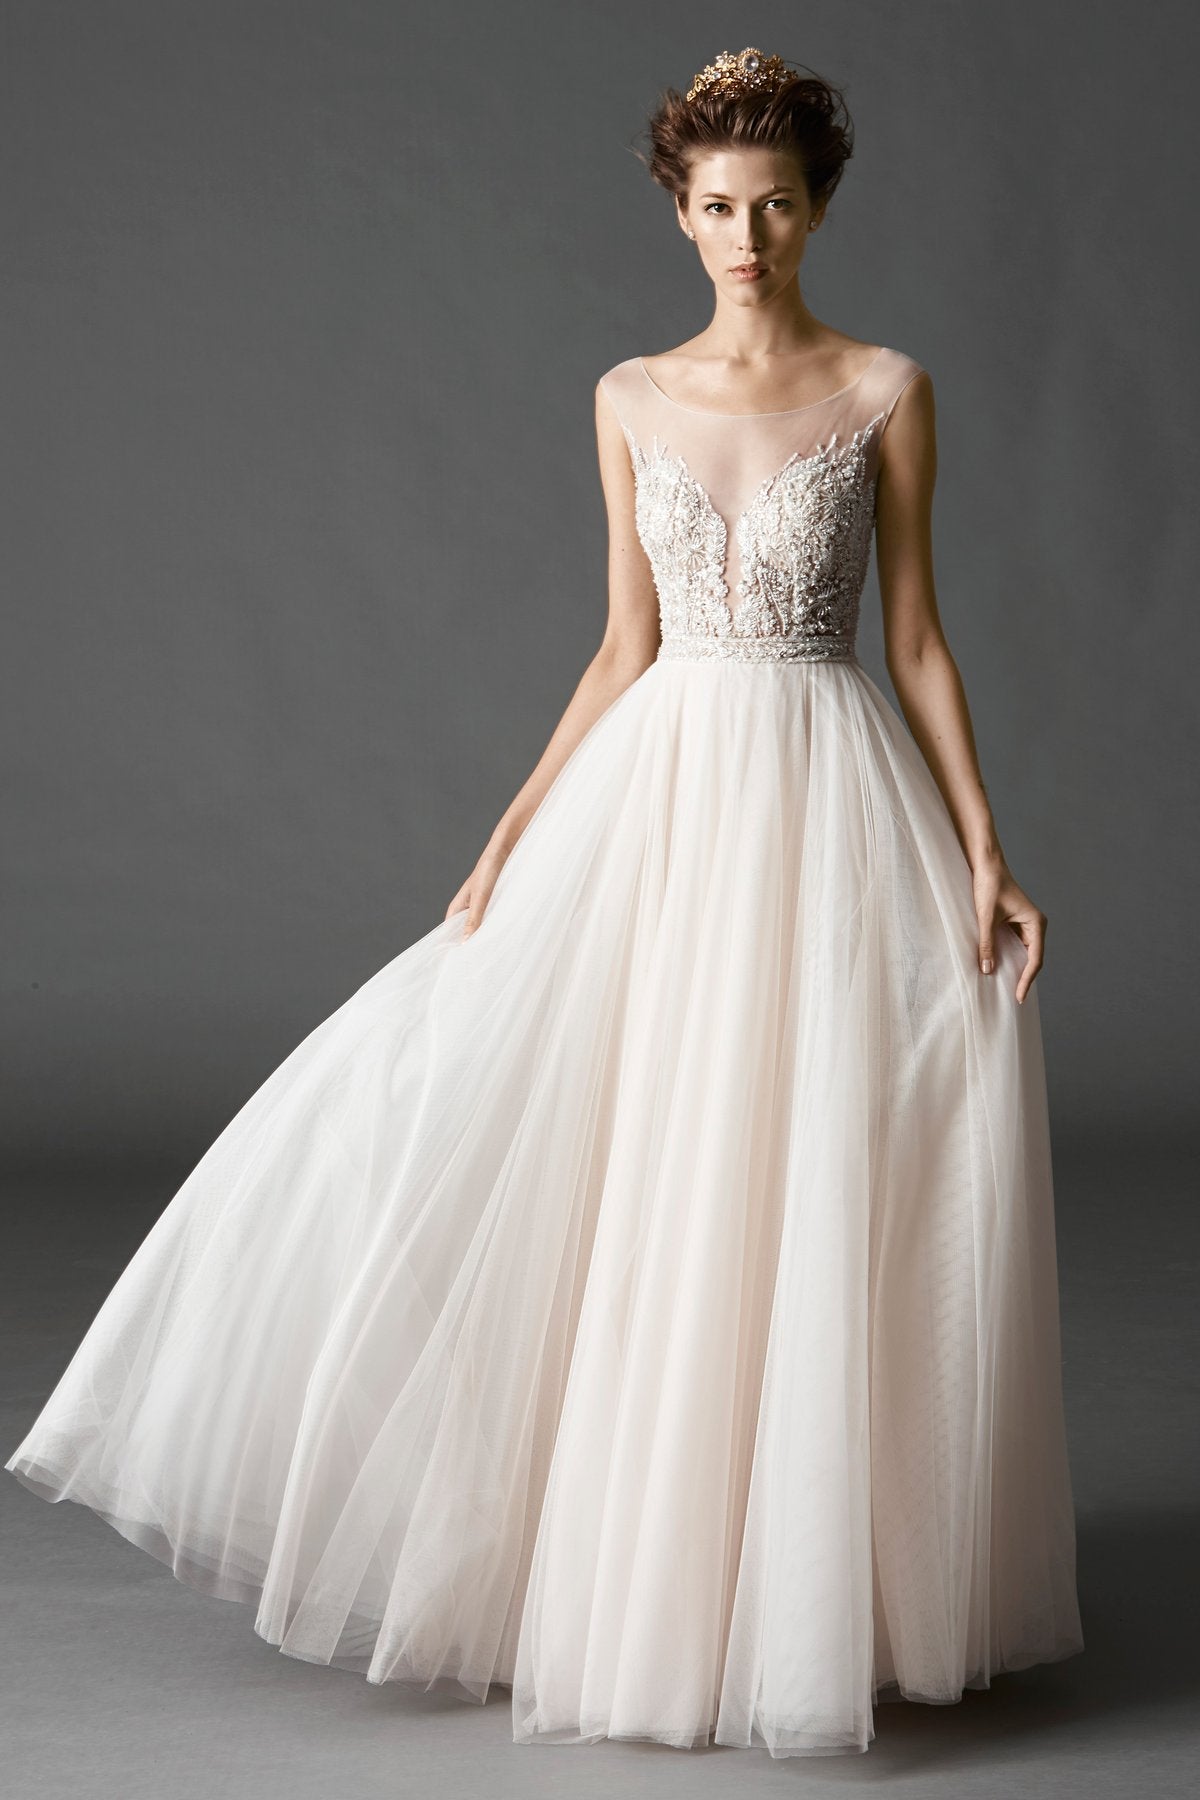 Look stunning in a Wedding Dress Romantic!